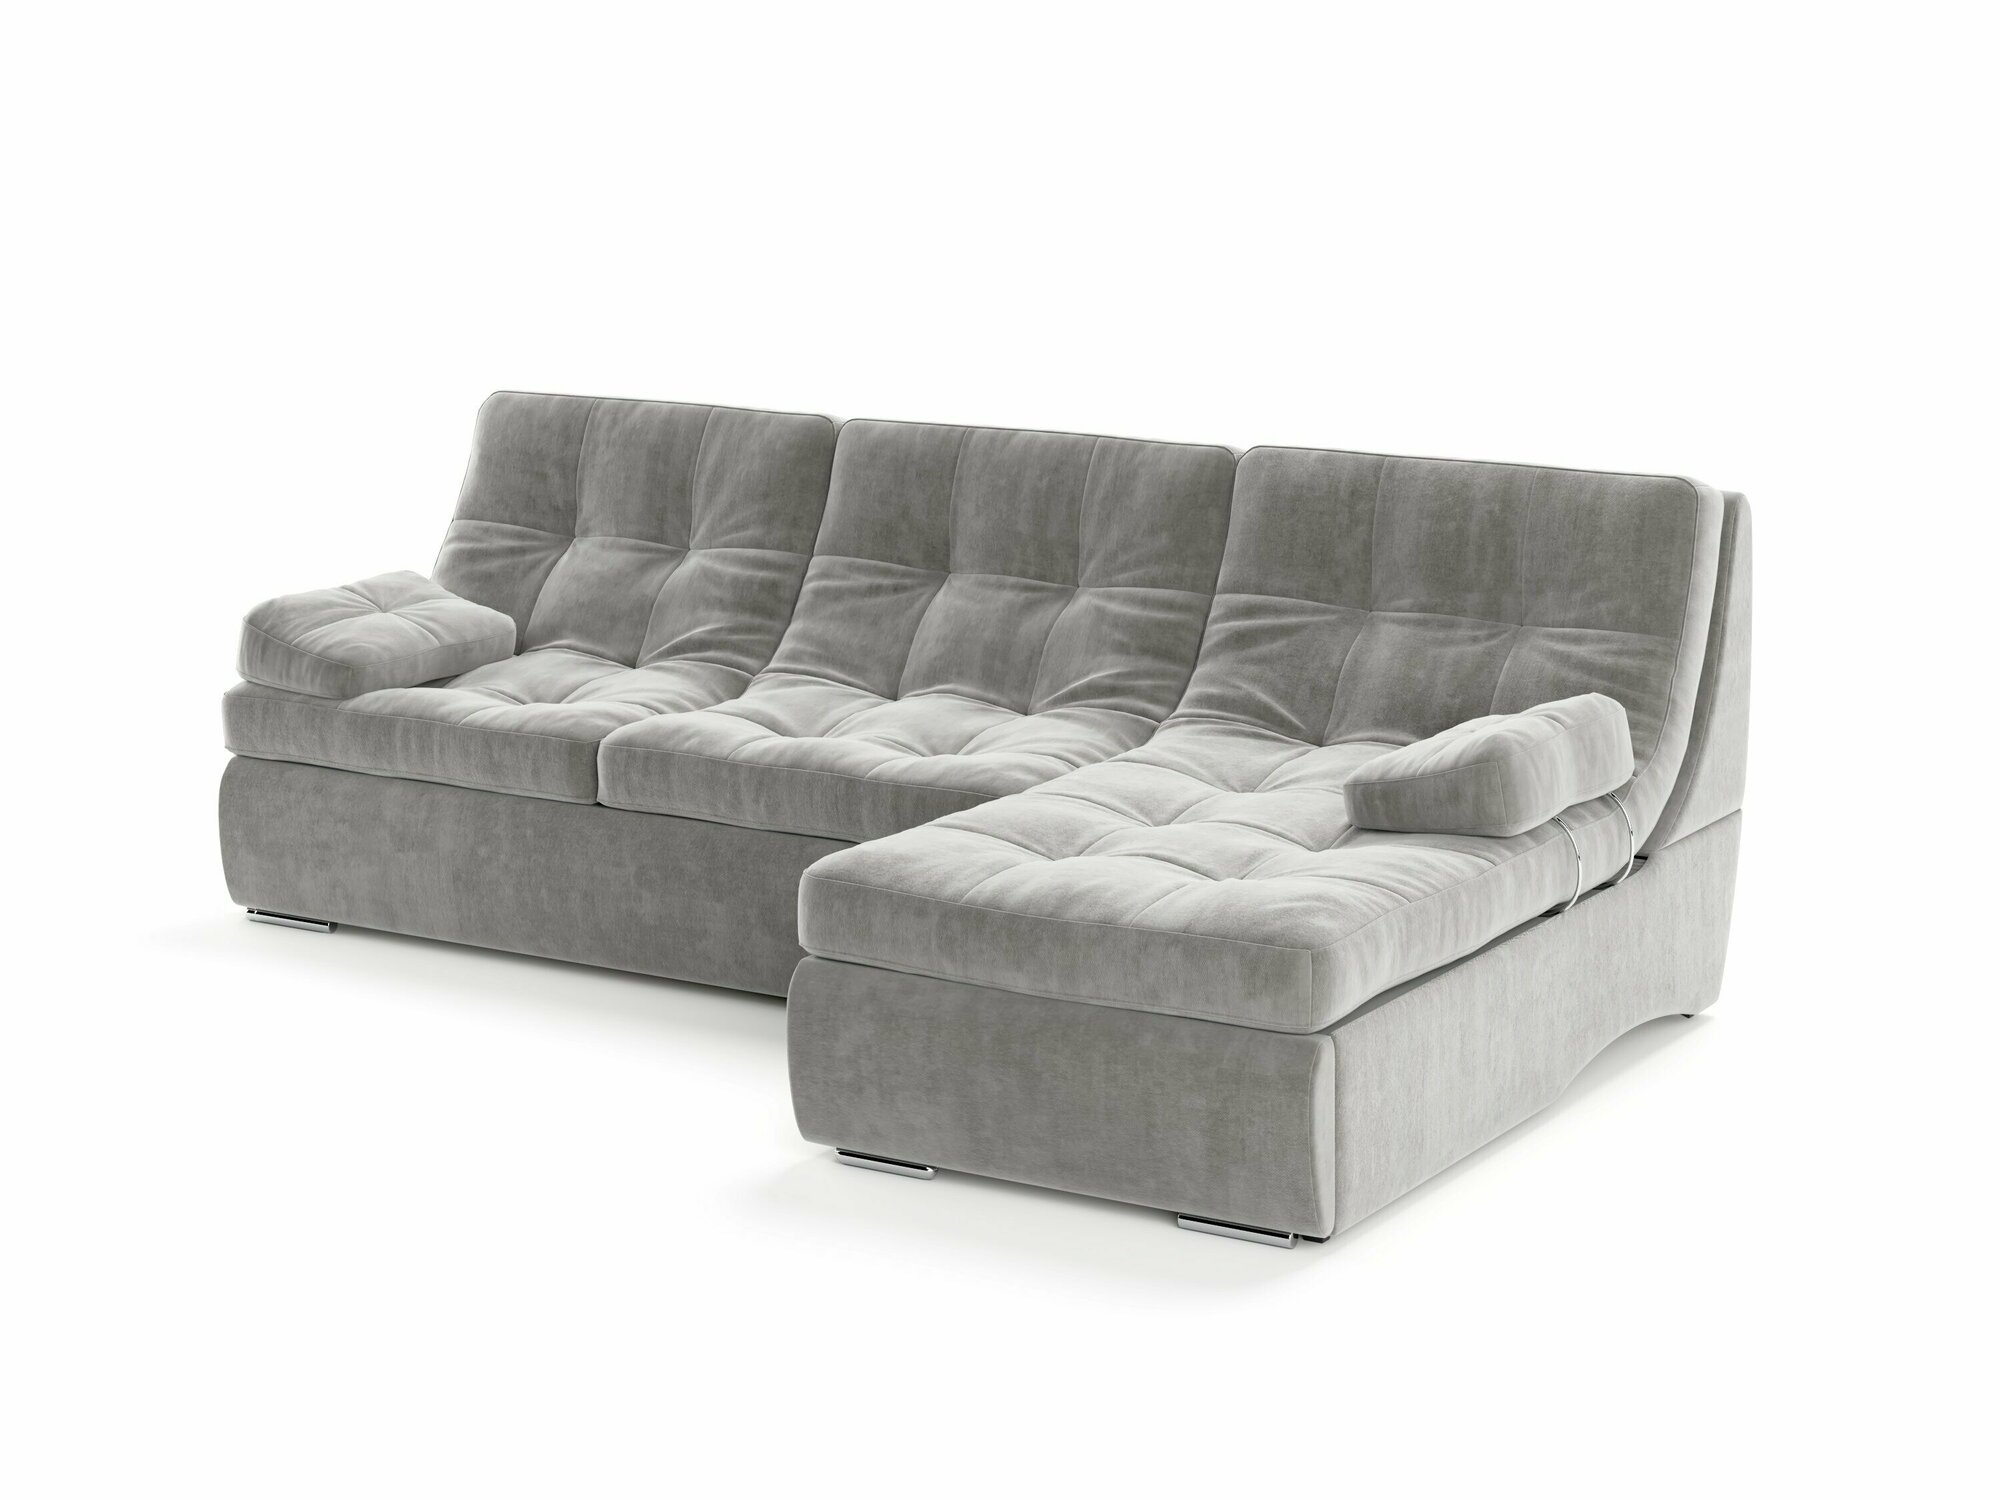 Угловой модульный диван Милтон, мягкий диван , большой диван